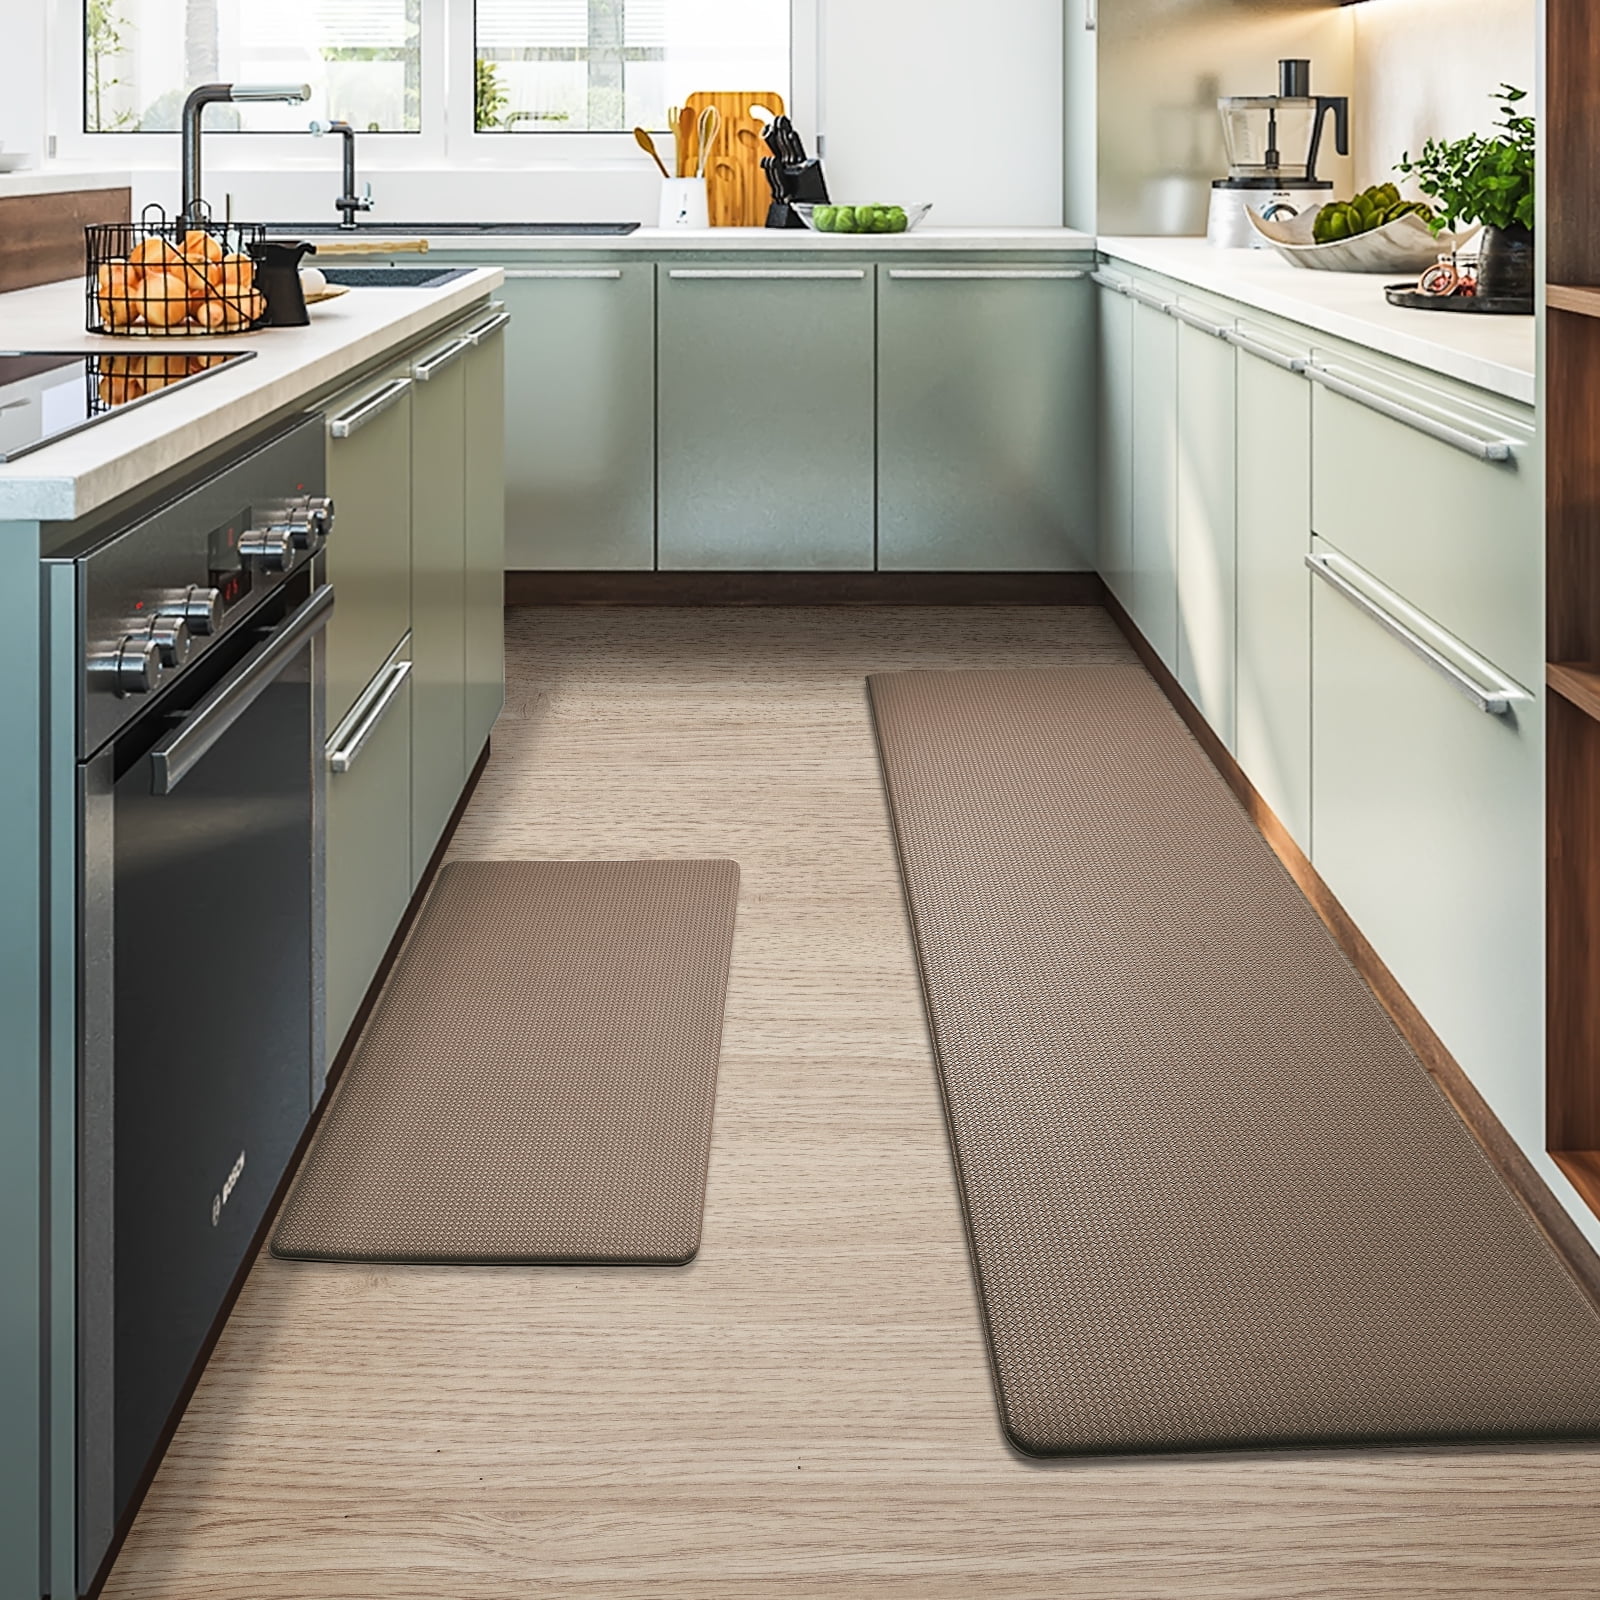 American Floor Mats Designer Soft Grain Kitchen Mats - 2' x 3